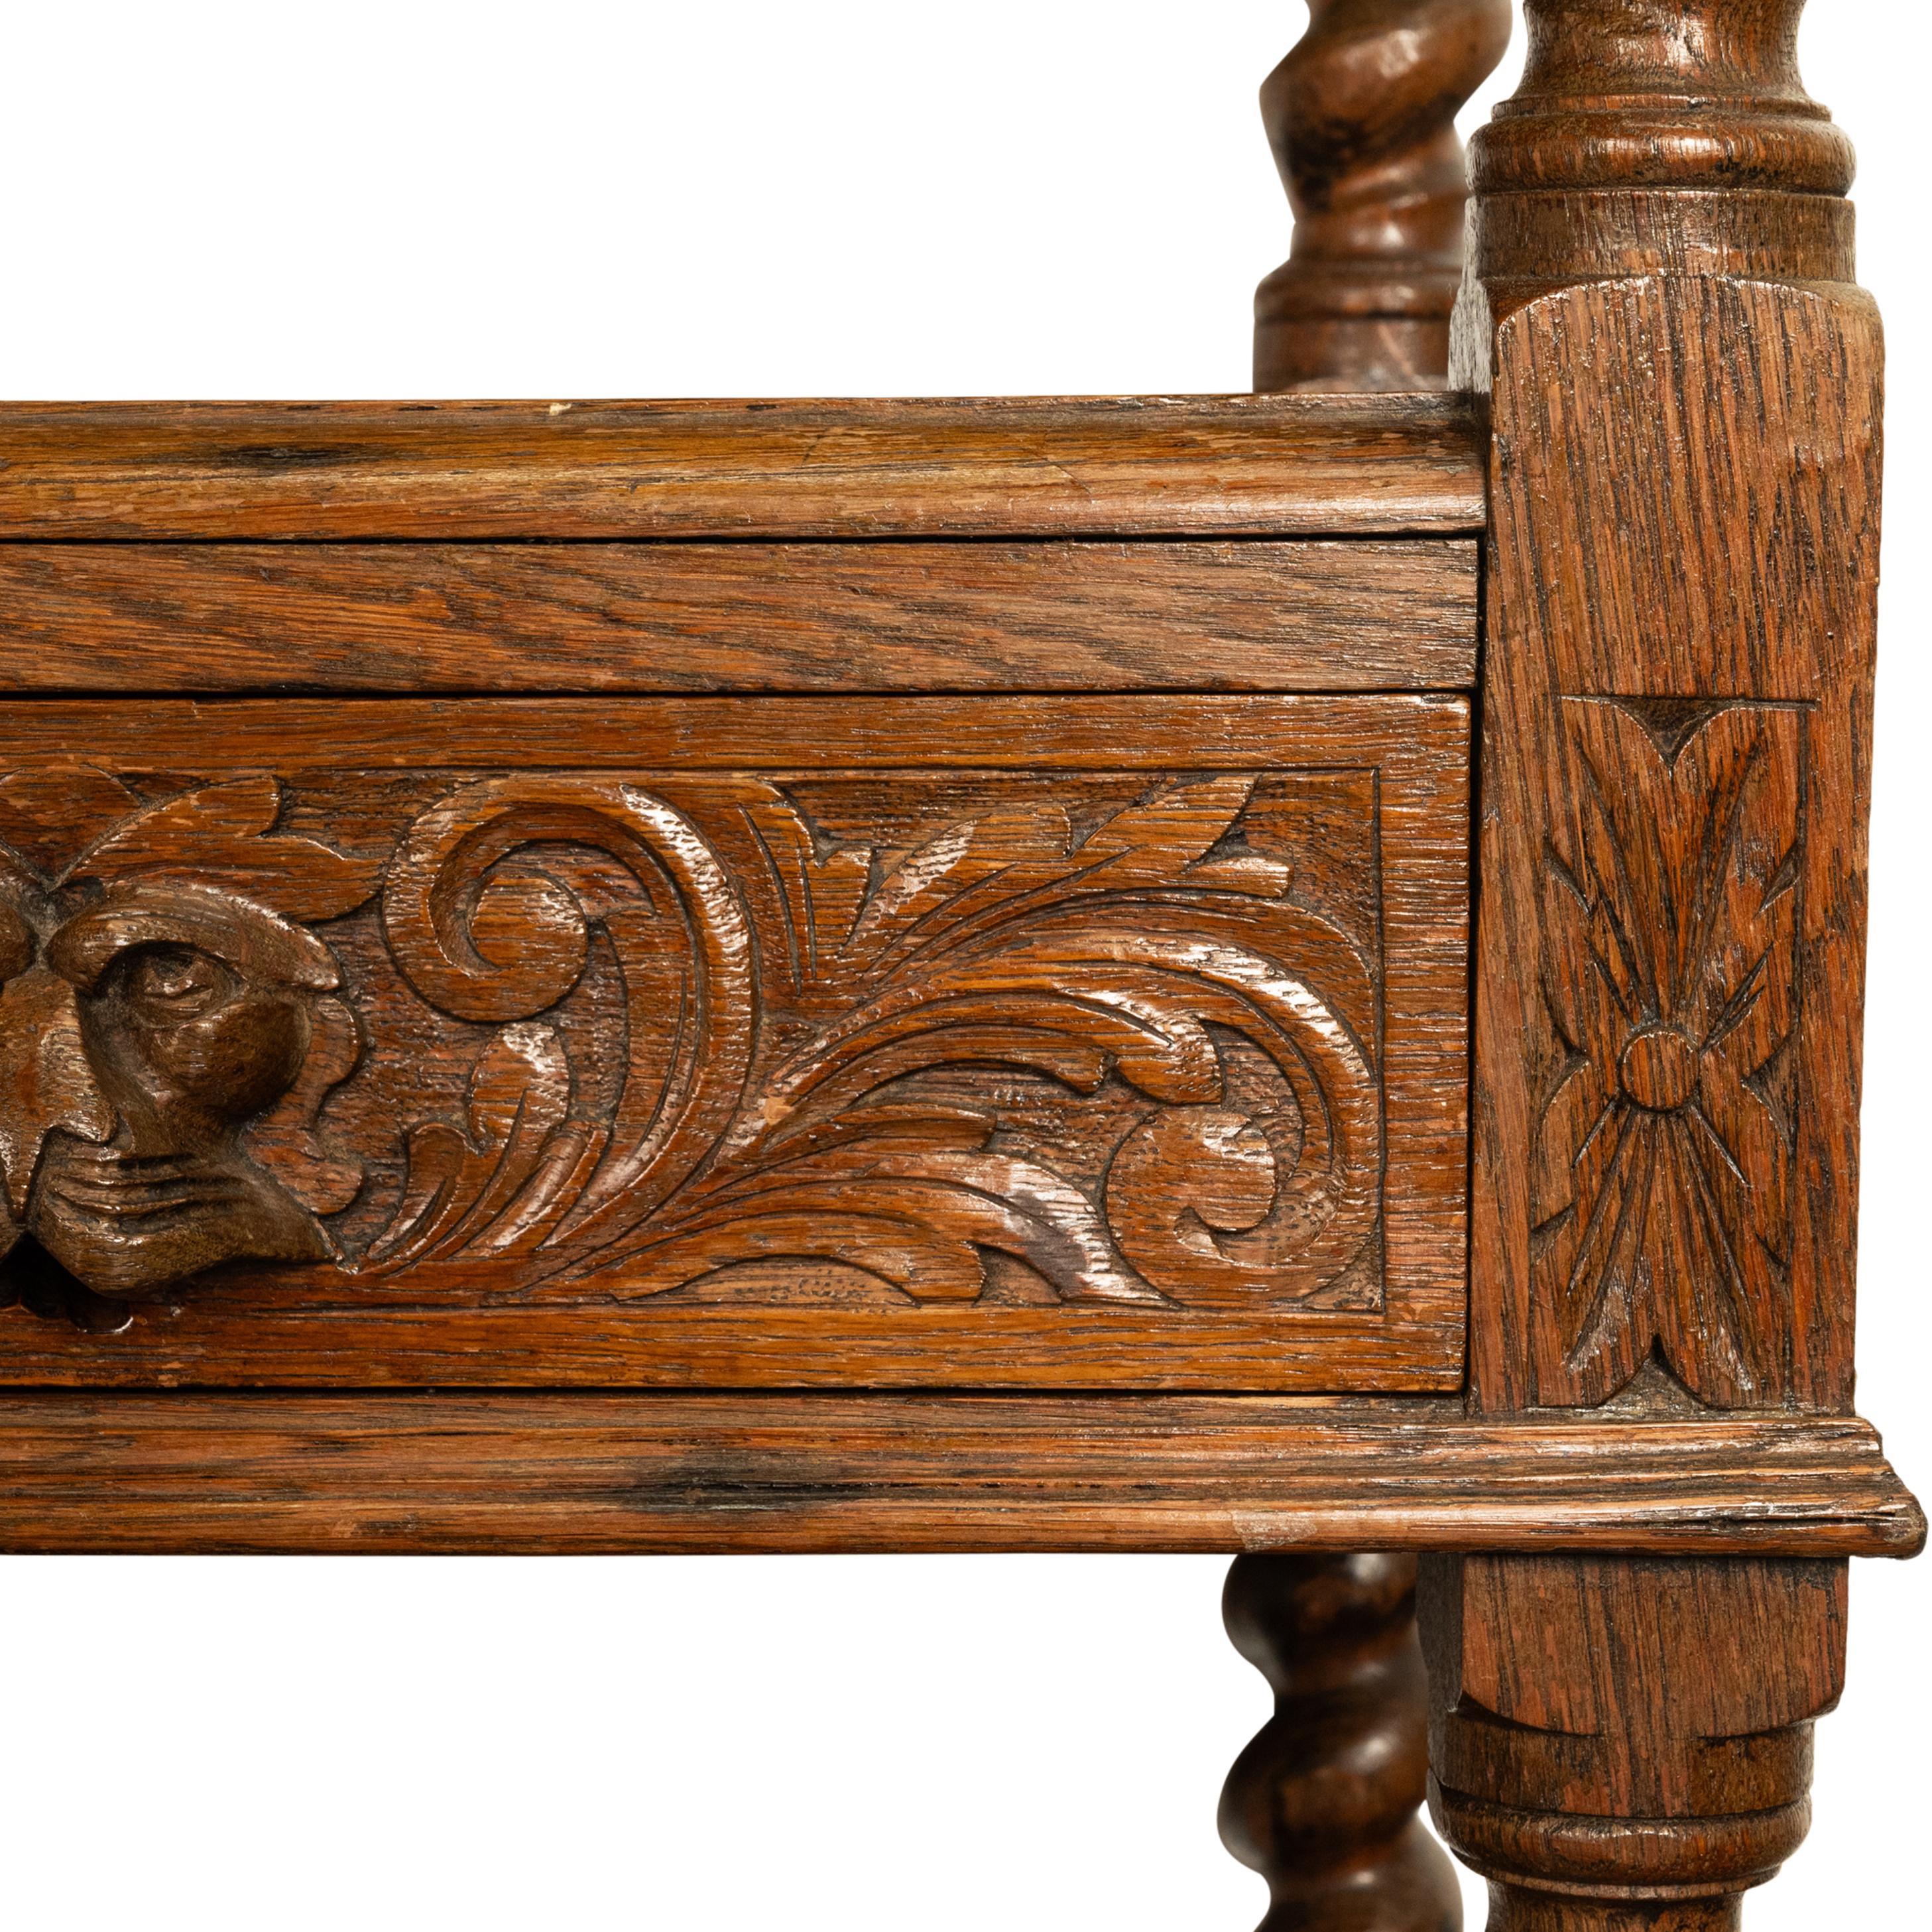 Antique French Renaissance Revival Carved Oak Barley Twist Server Buffet 1870 For Sale 9